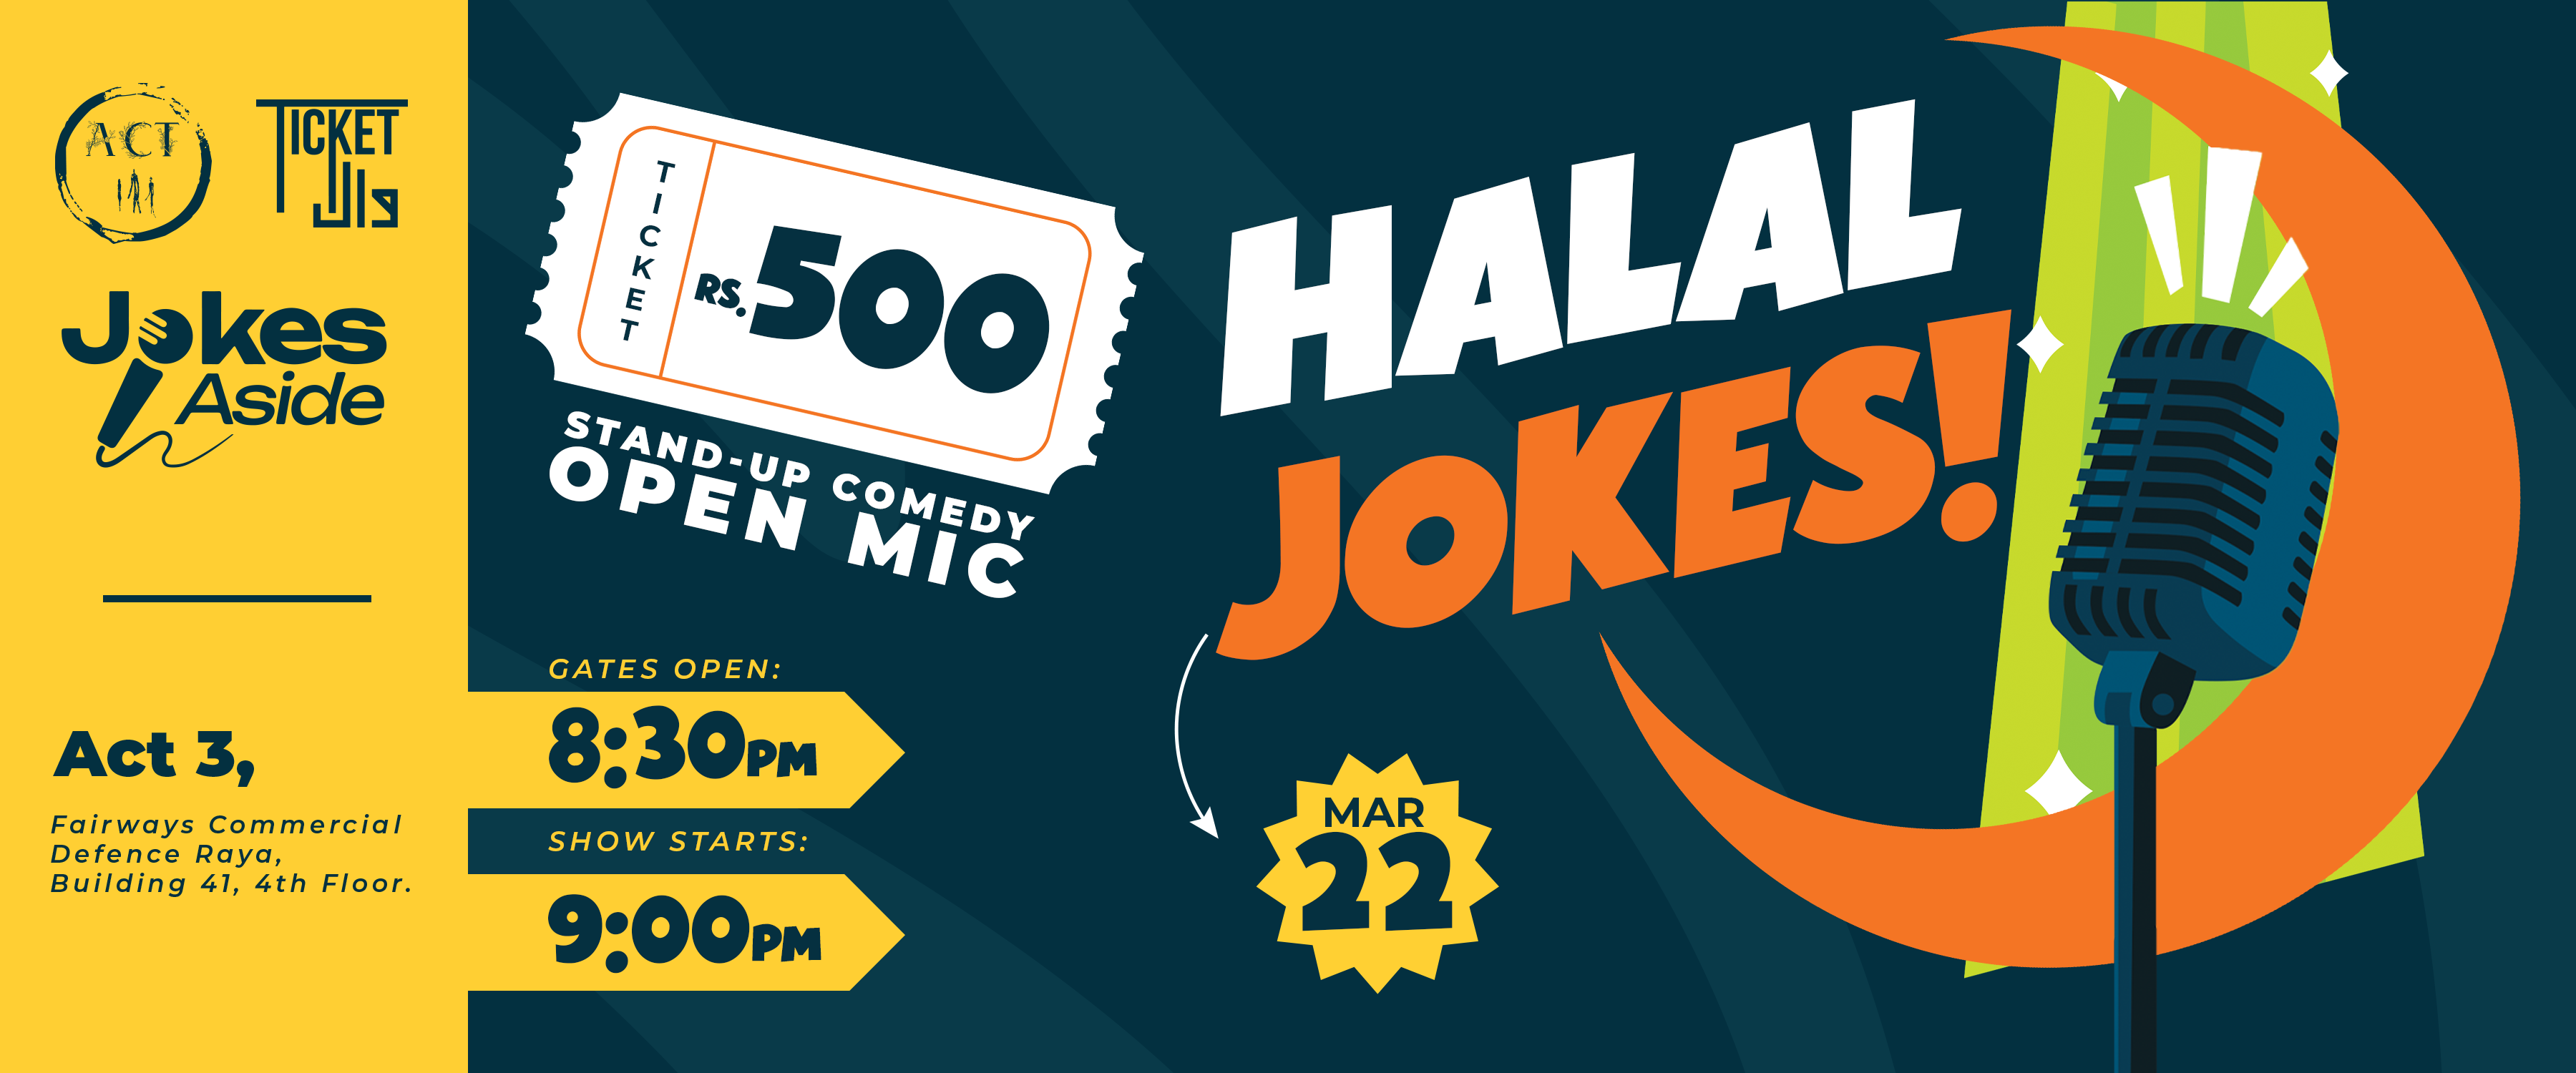 Halal Jokes 1